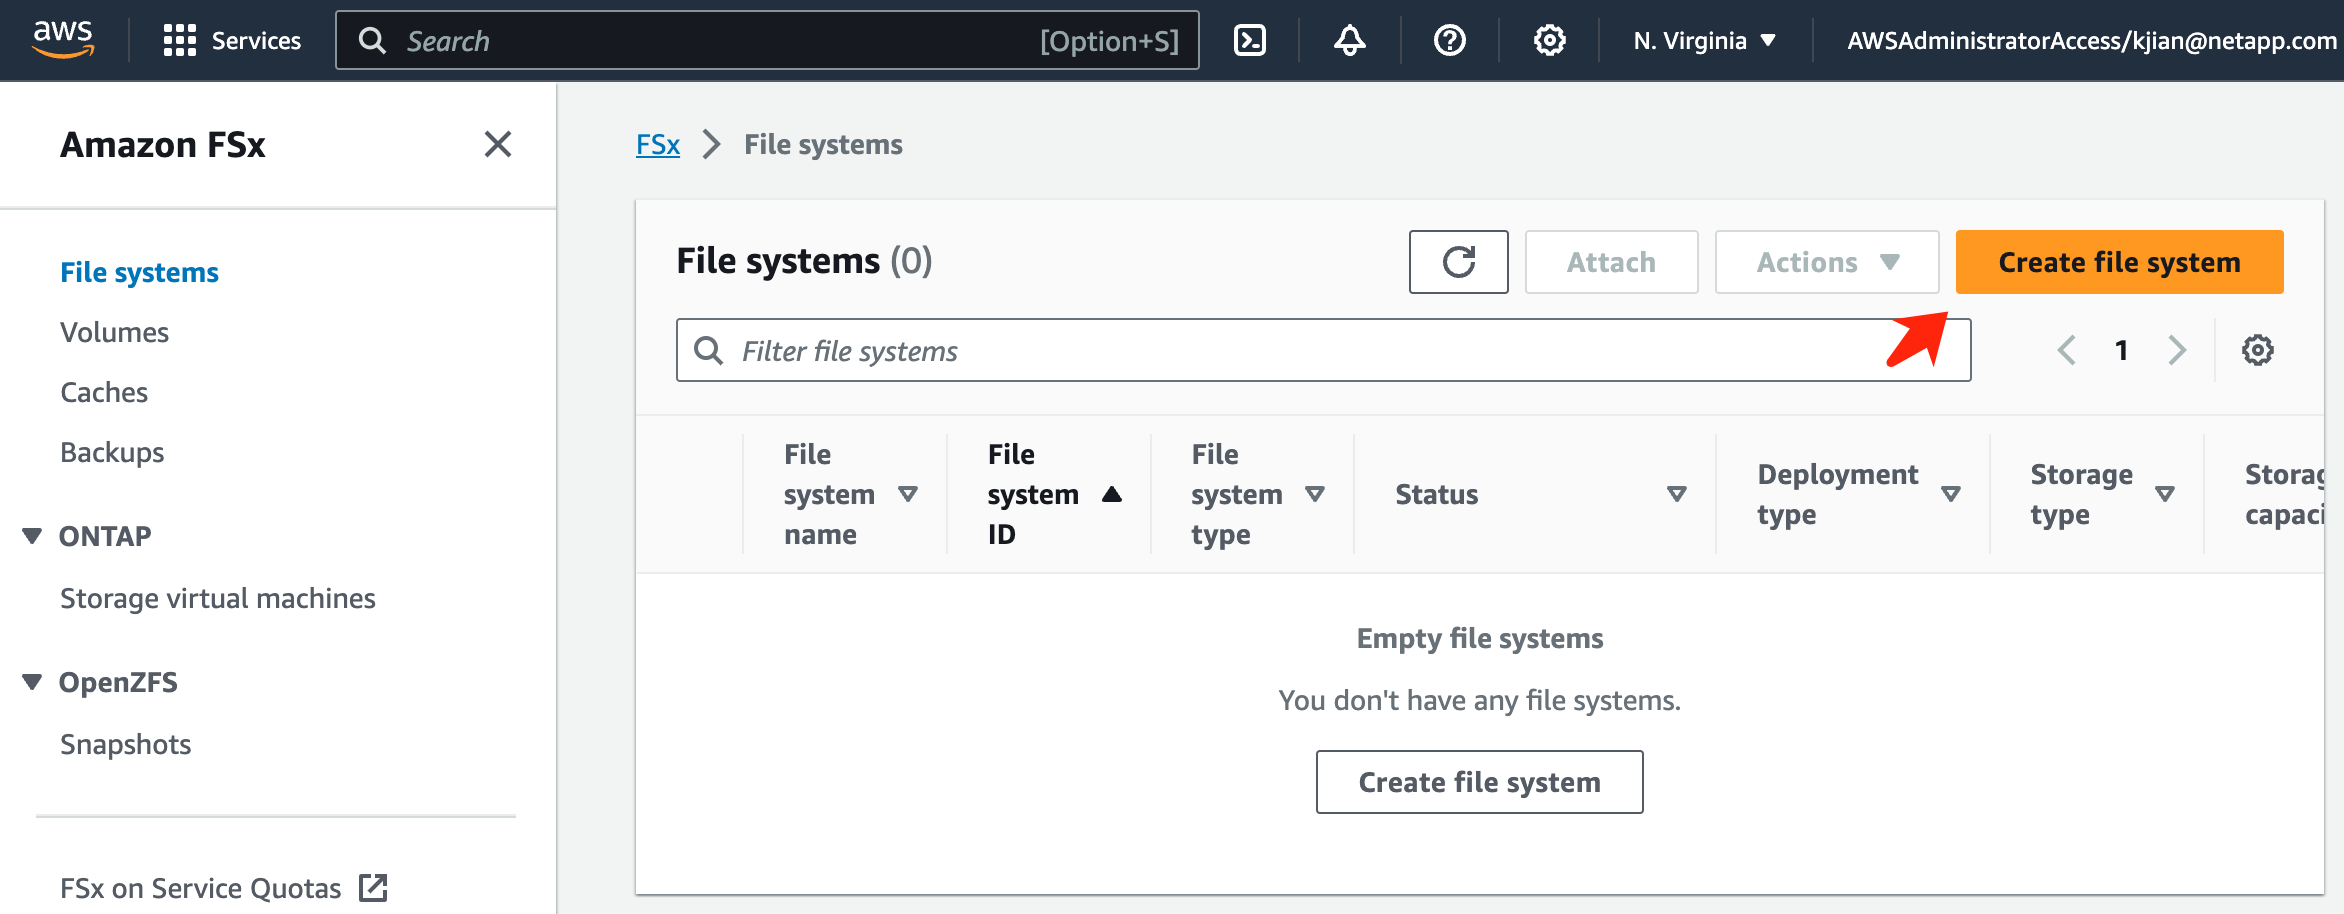 Error: Create file system